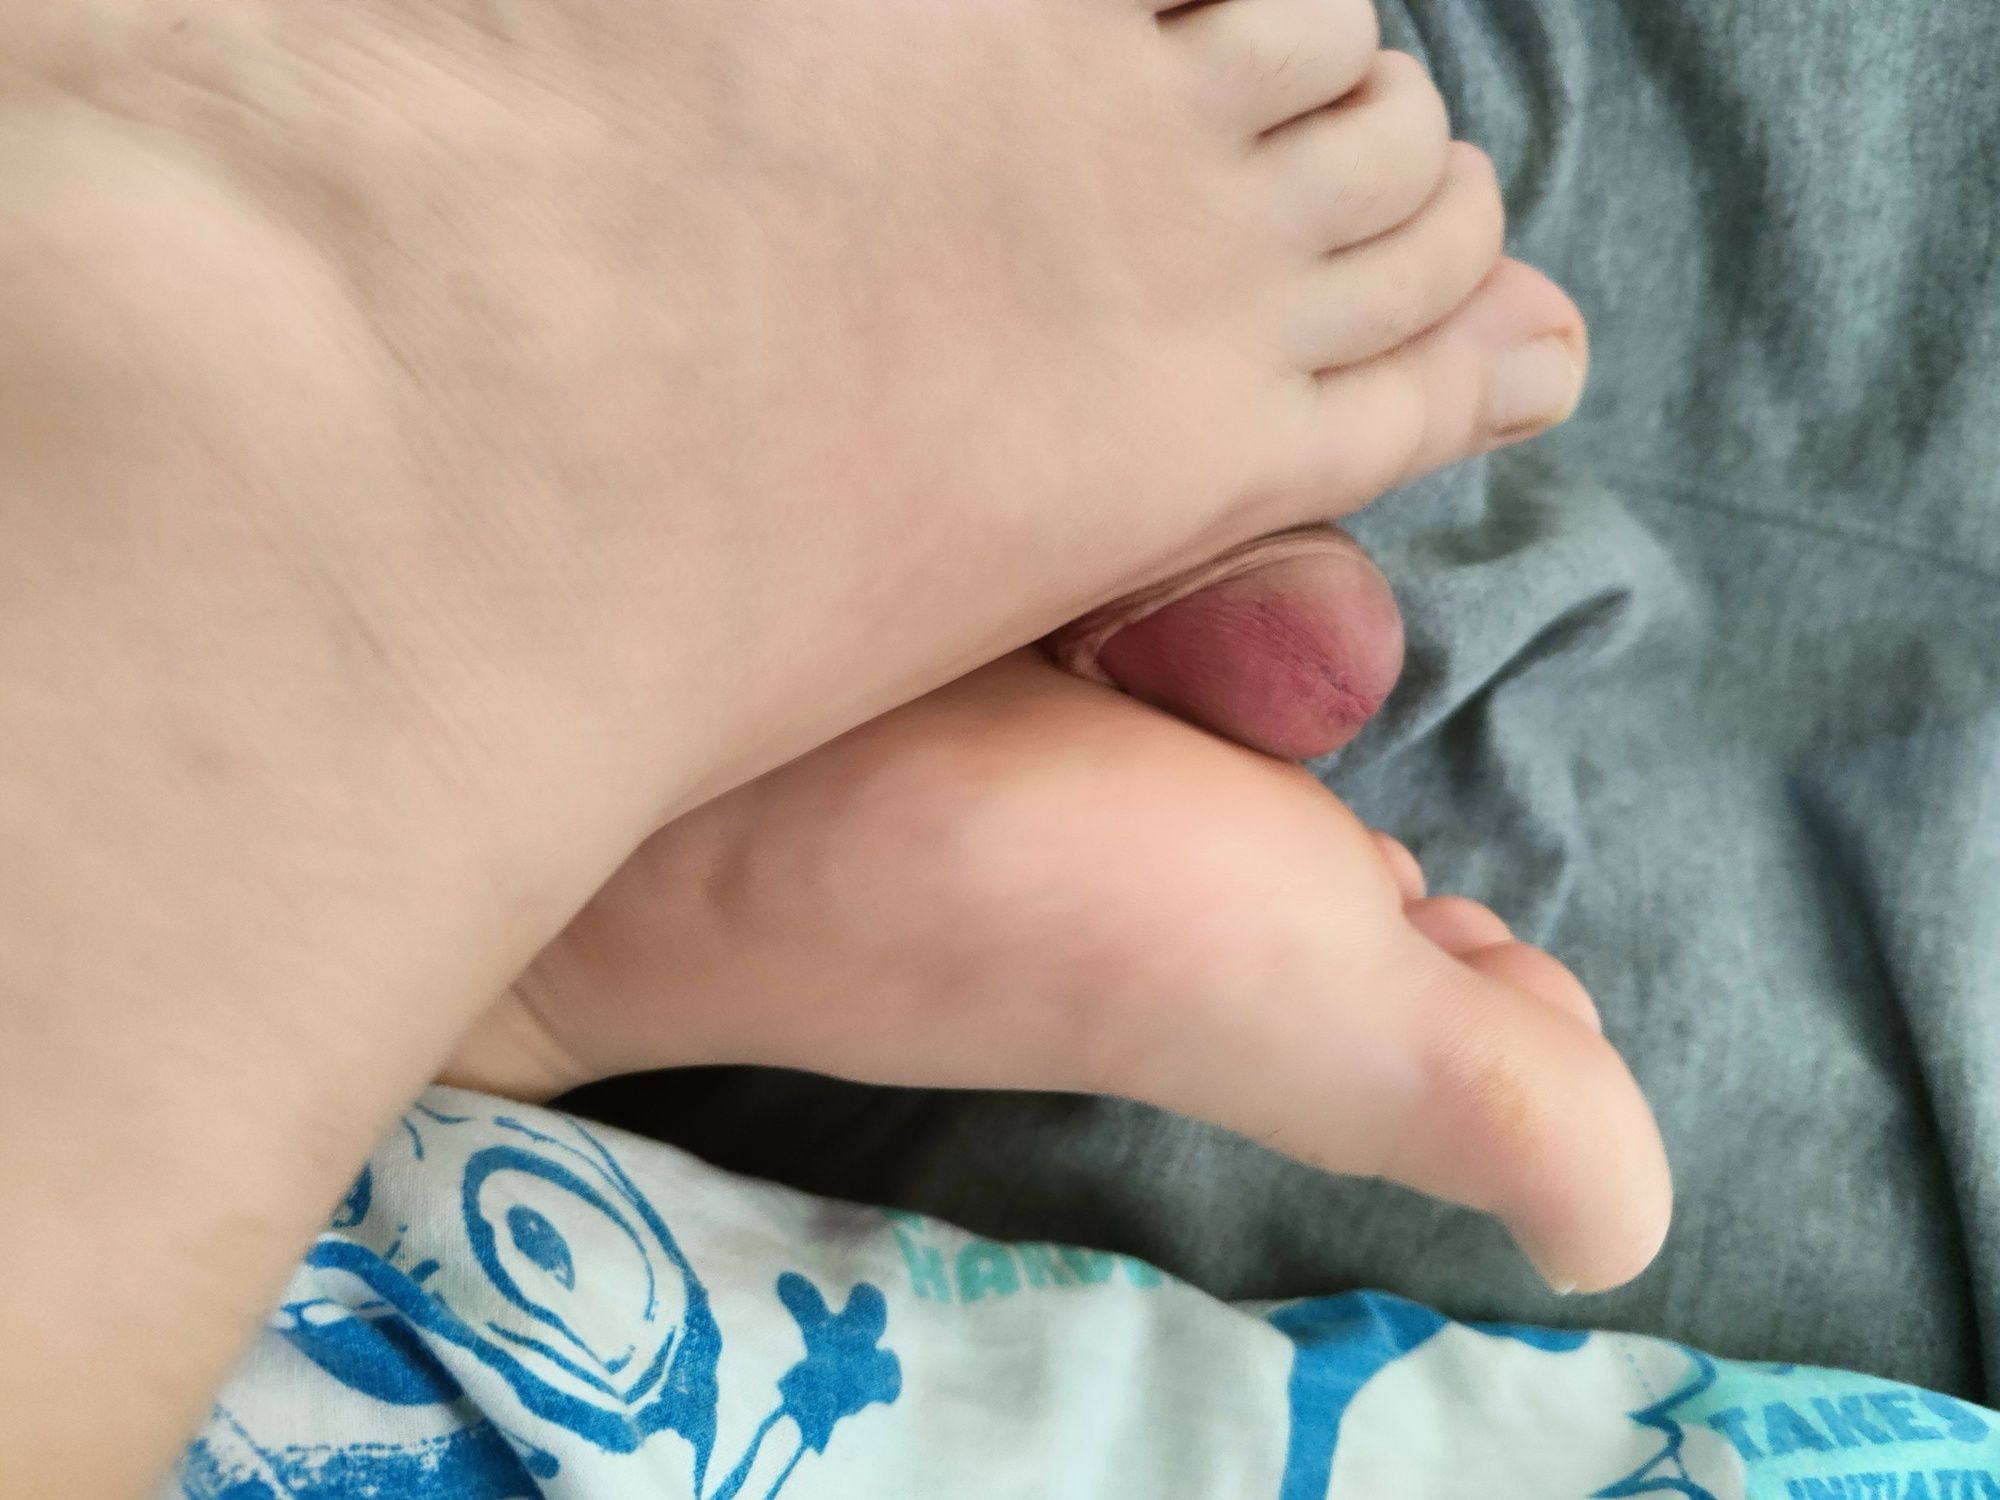 Hornychubby feet And hanumanfeets dick #7